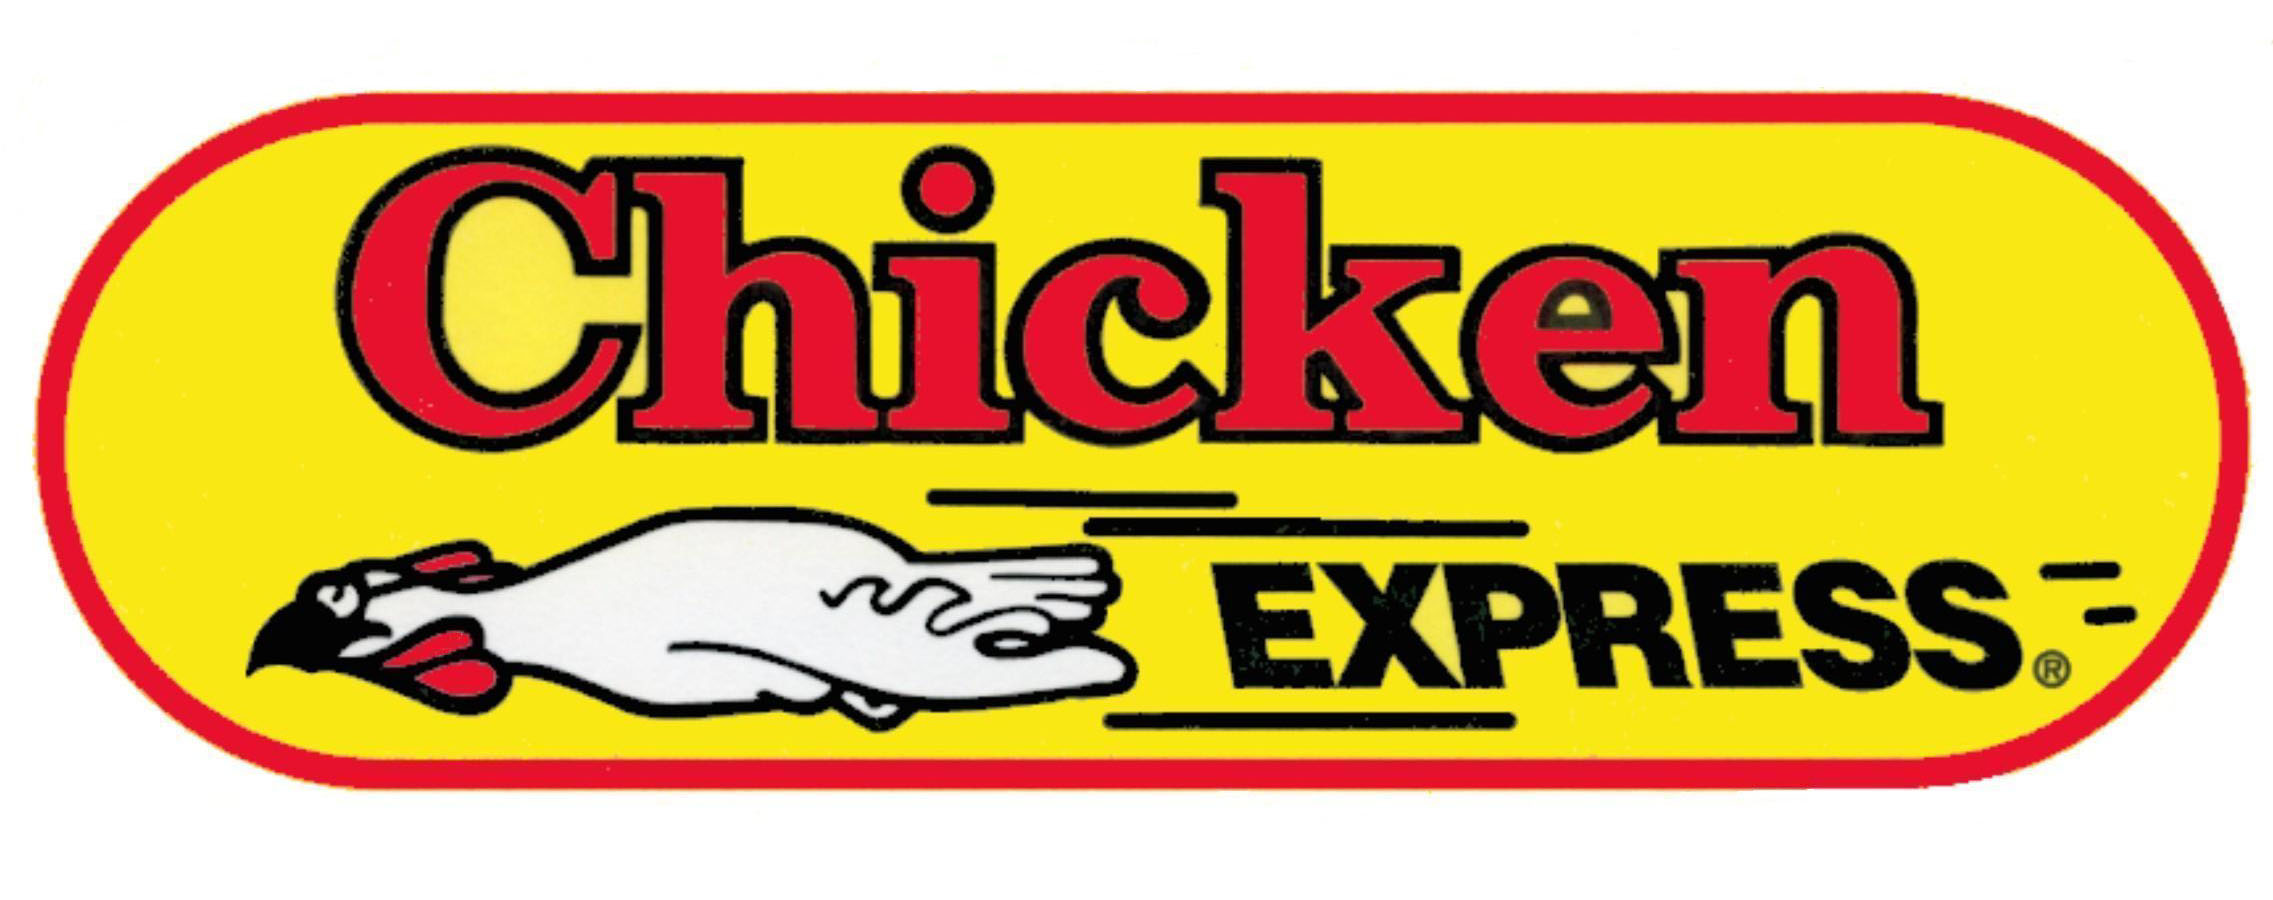 Chicken express Logos